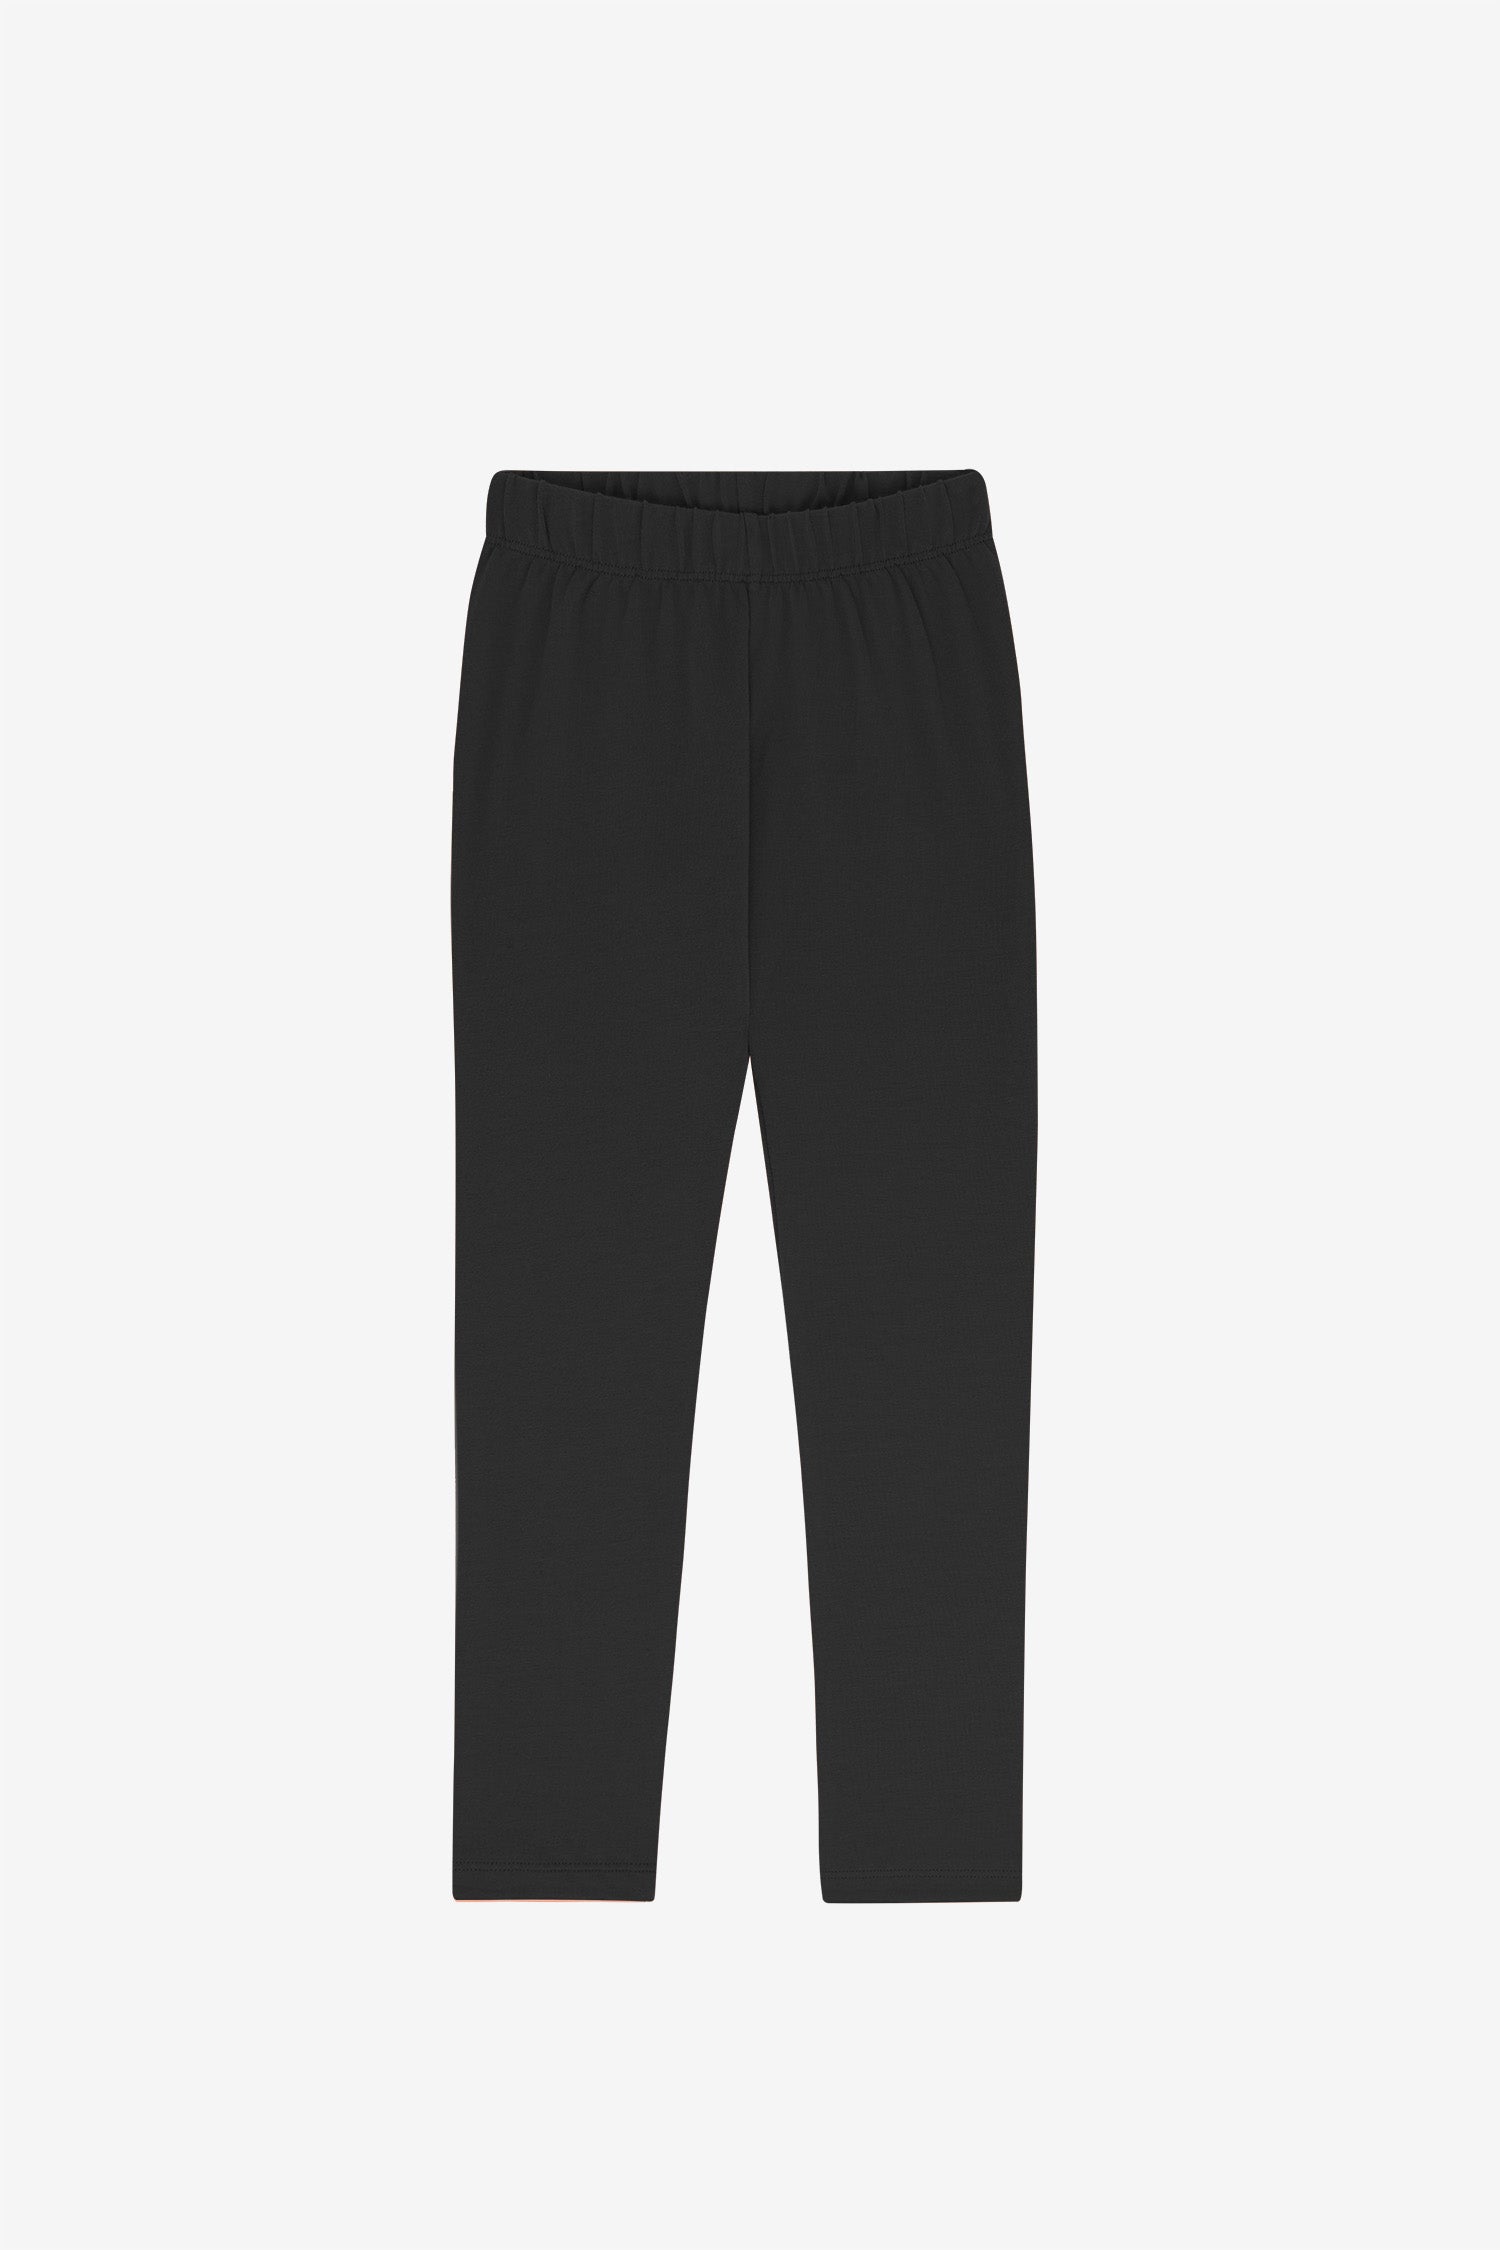  MC&LO Cotton Spandex Comfort Cute Slim Ankle Length Leggings  Yoga Pants Kids Size 2-14 USA Black: Clothing, Shoes & Jewelry